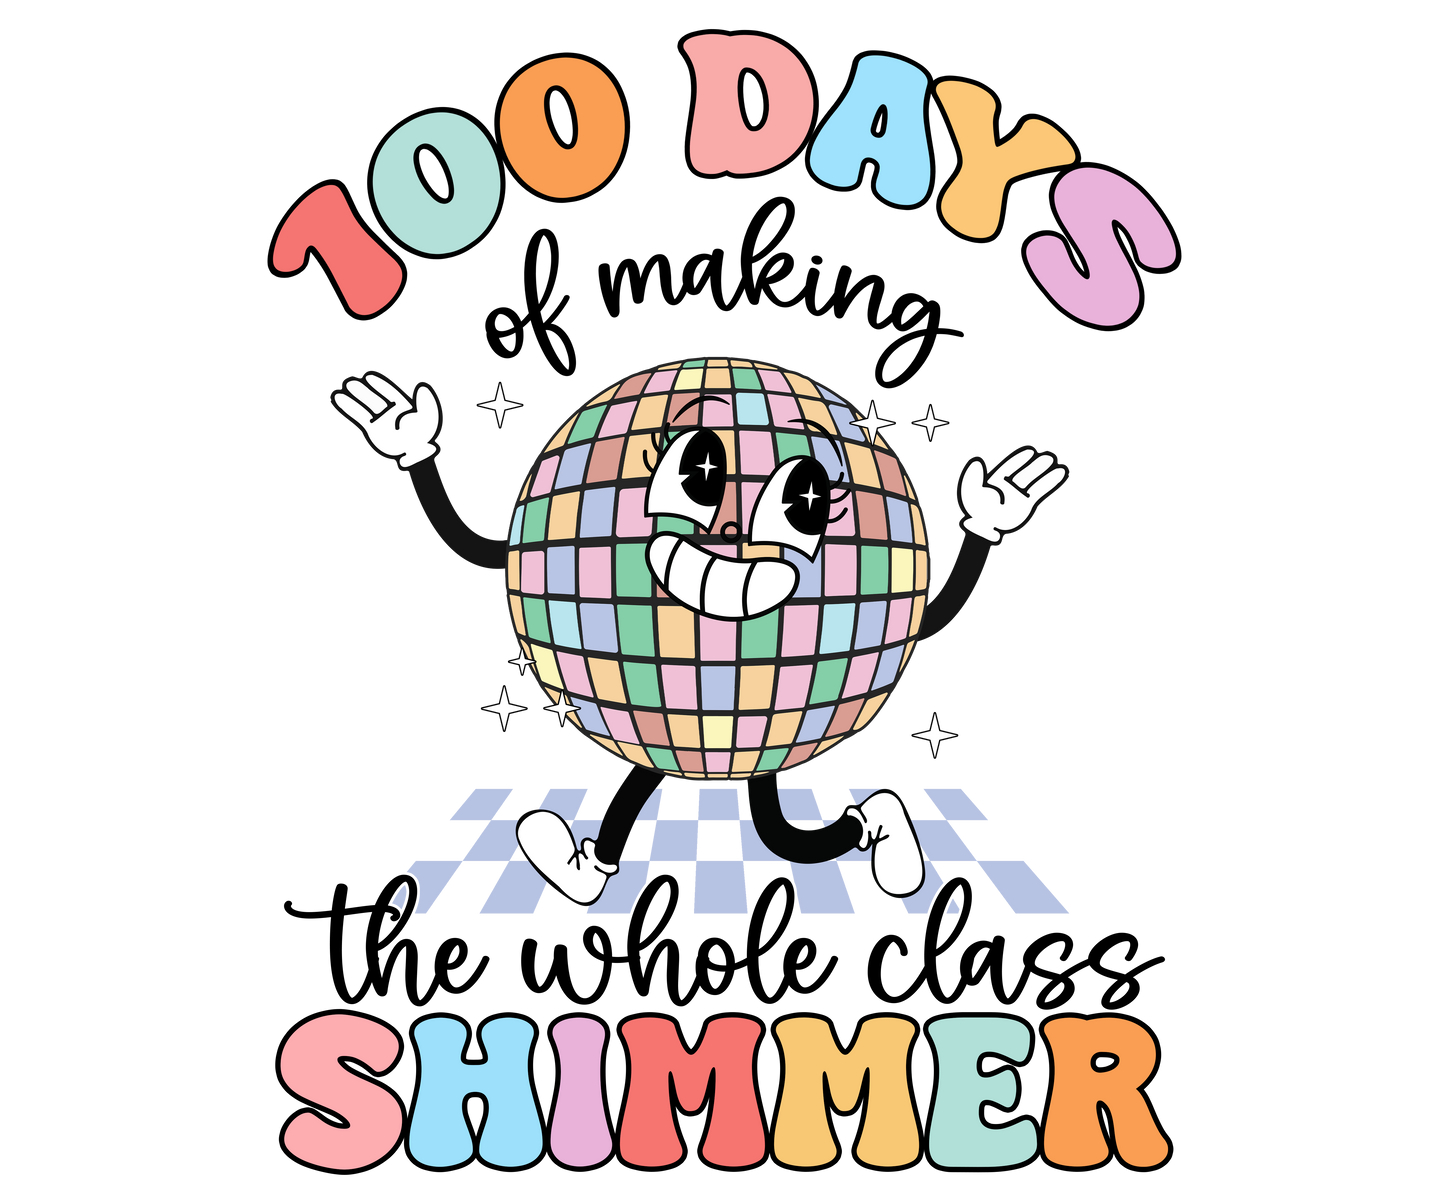 100 days Shimmer